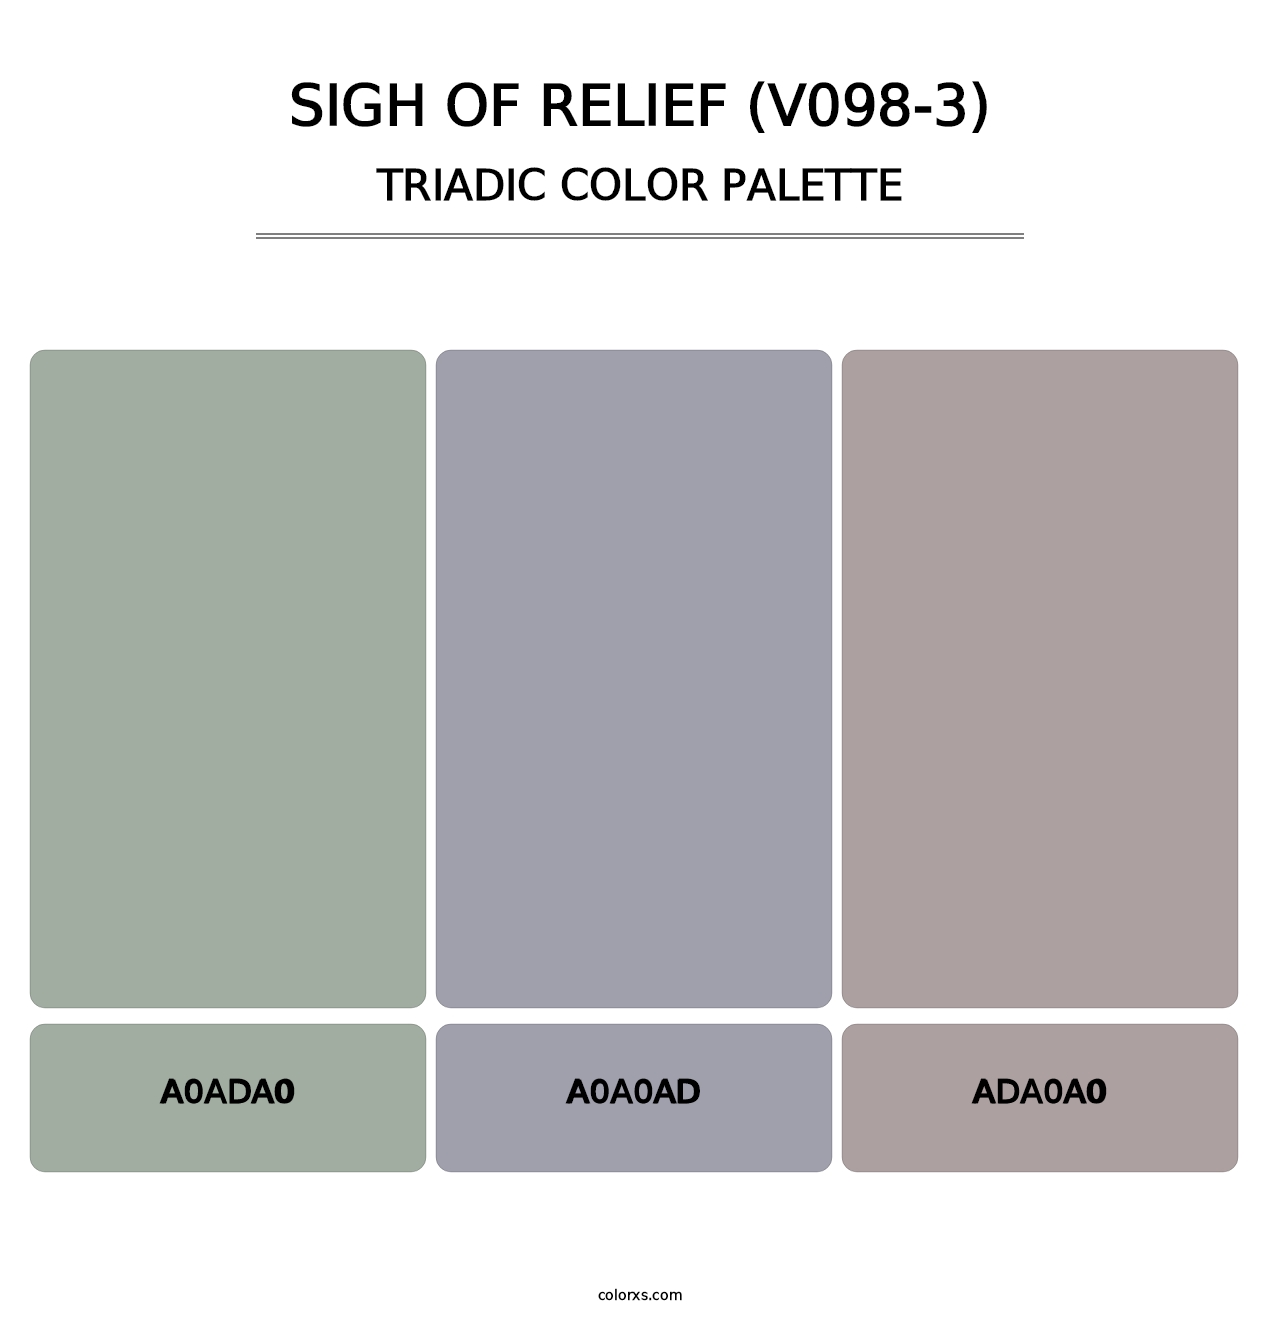 Sigh of Relief (V098-3) - Triadic Color Palette